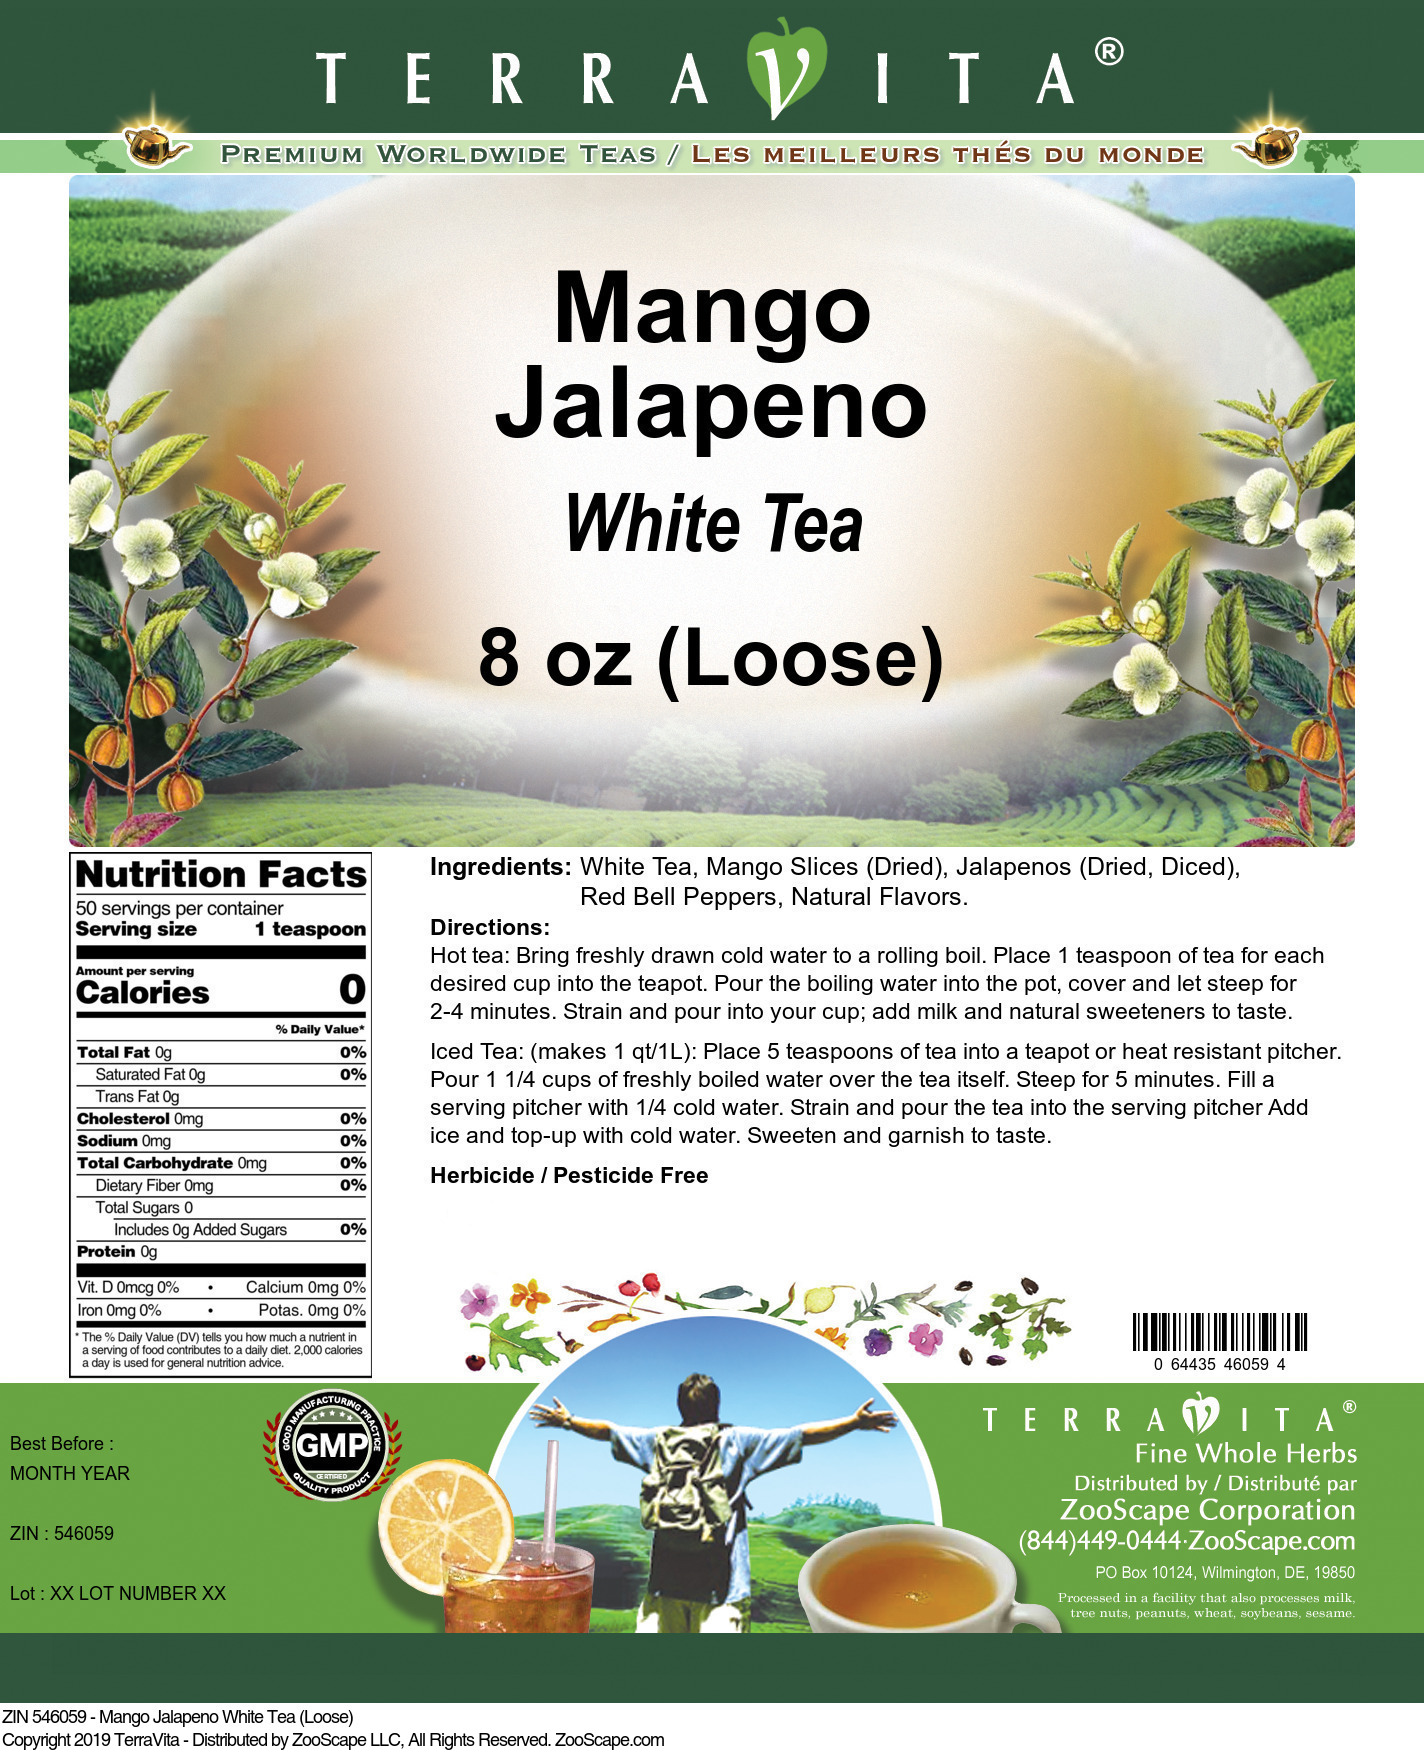 Mango Jalapeno White Tea (Loose) - Label